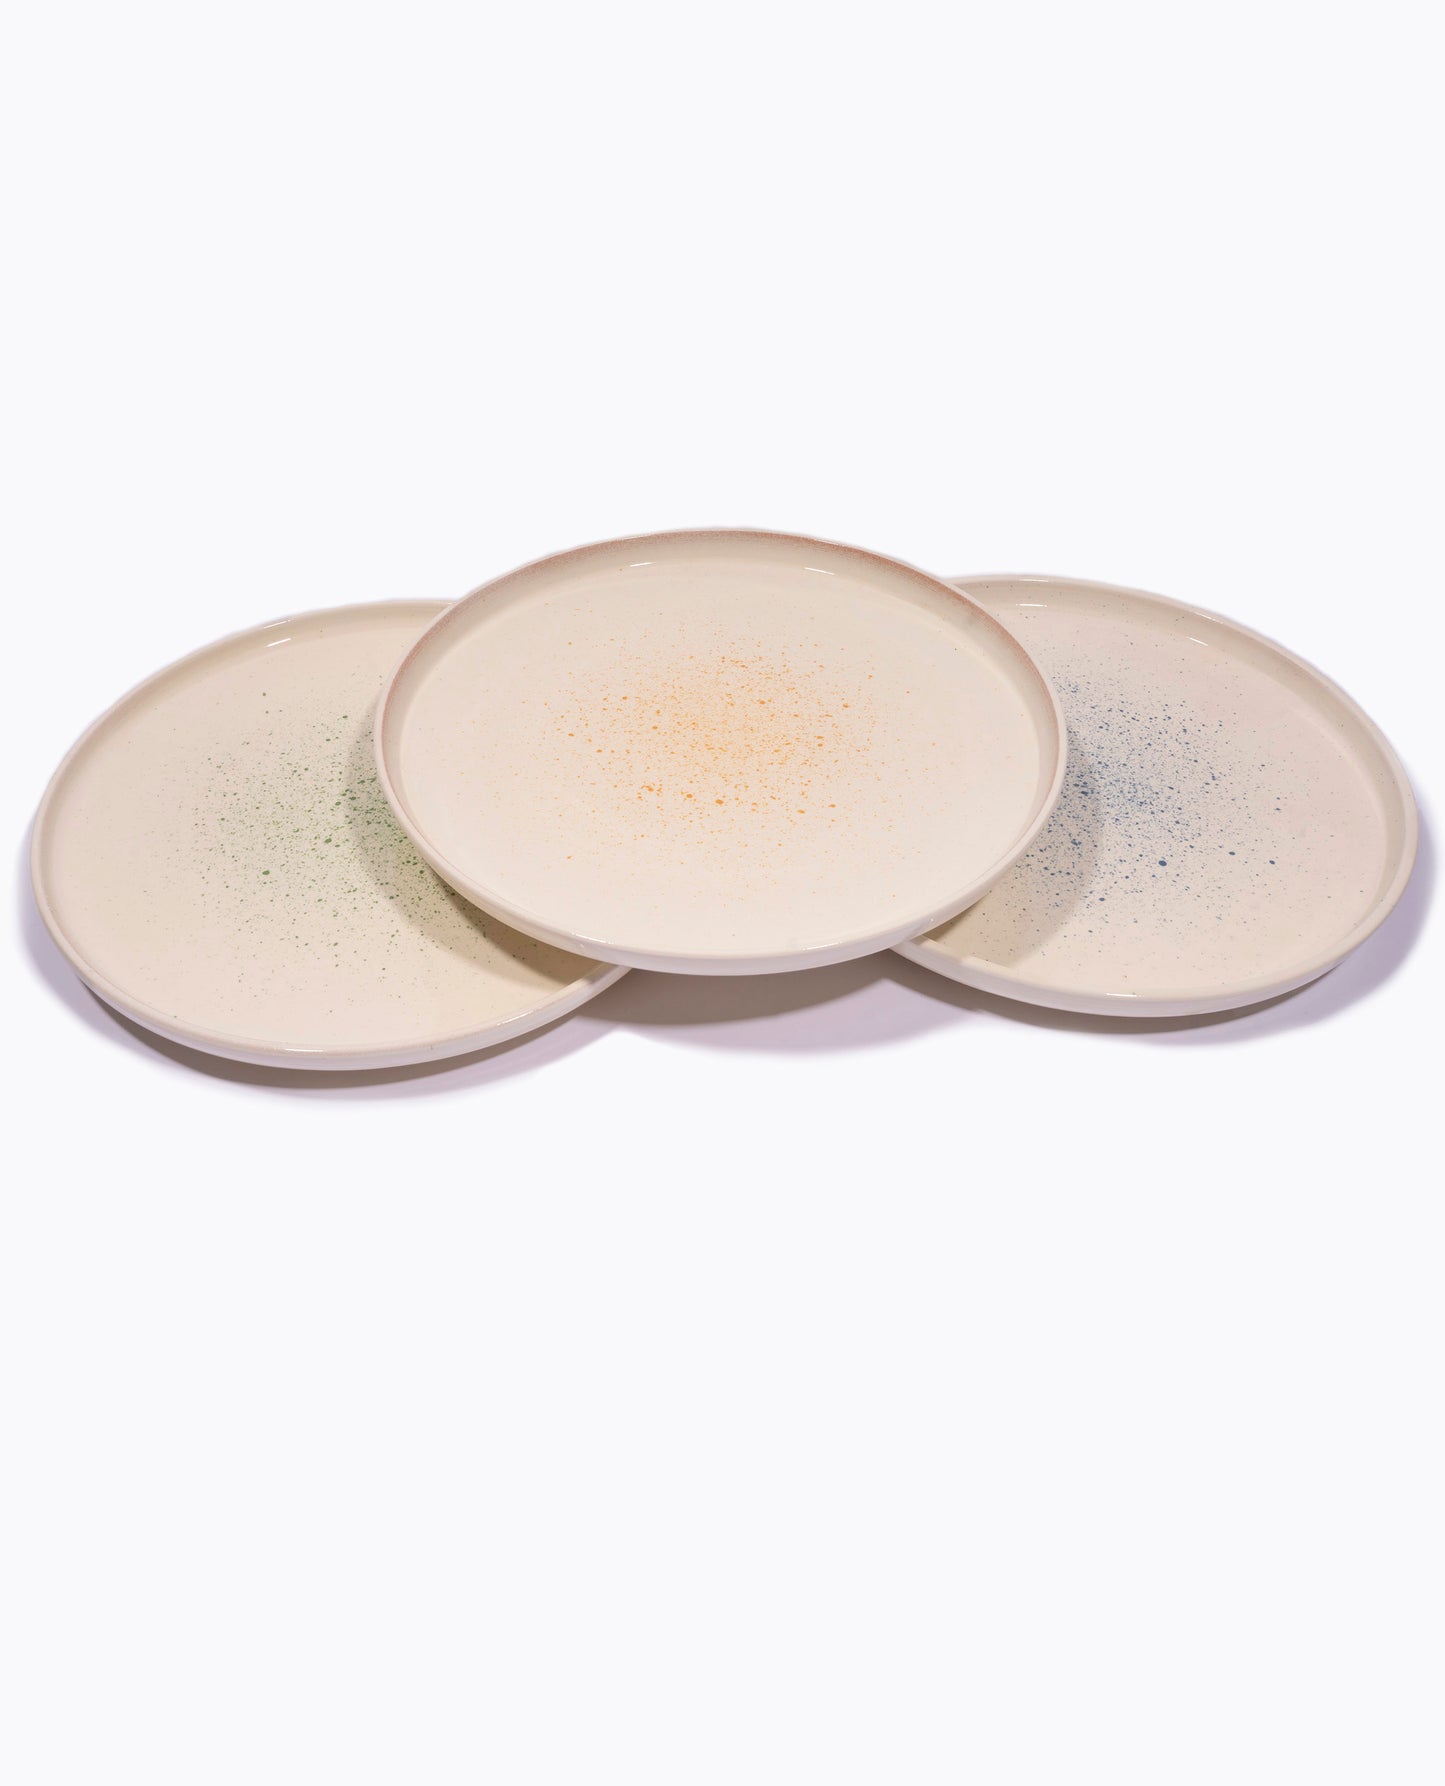 Rustam Usmanov Ceramics Rain Plate